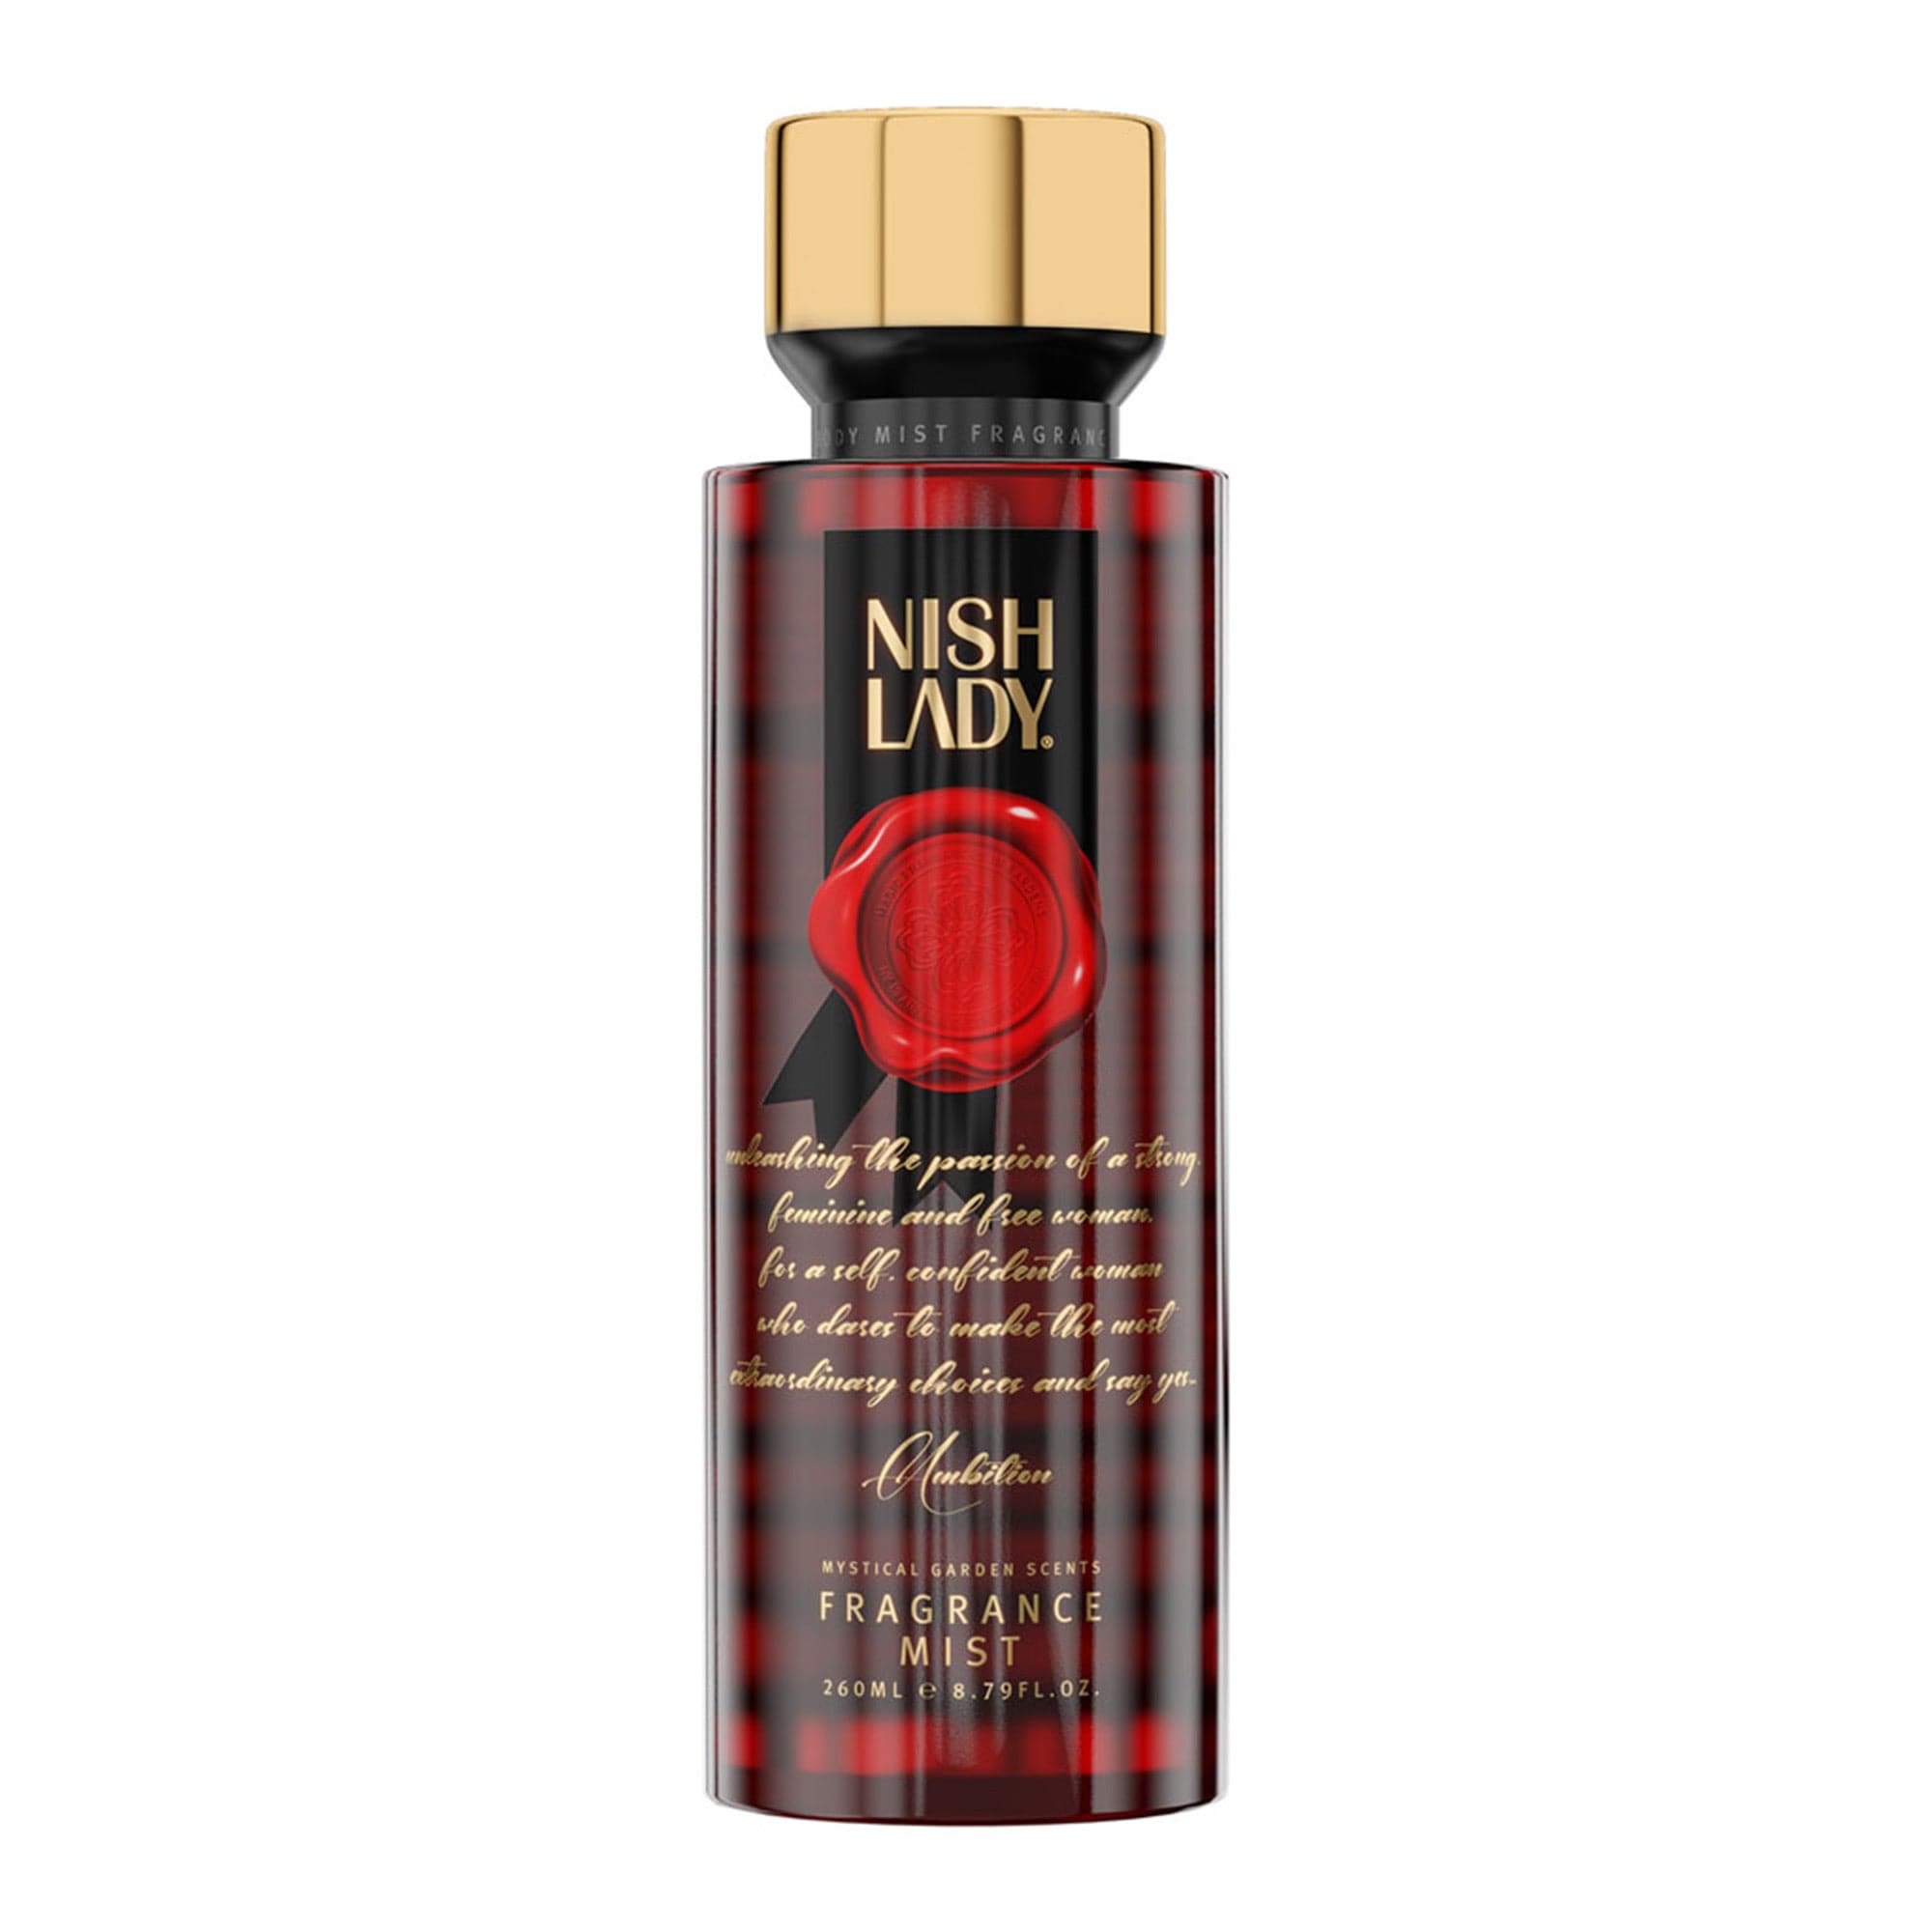 Nishlady - Fragrance Mist Ambition 260ml